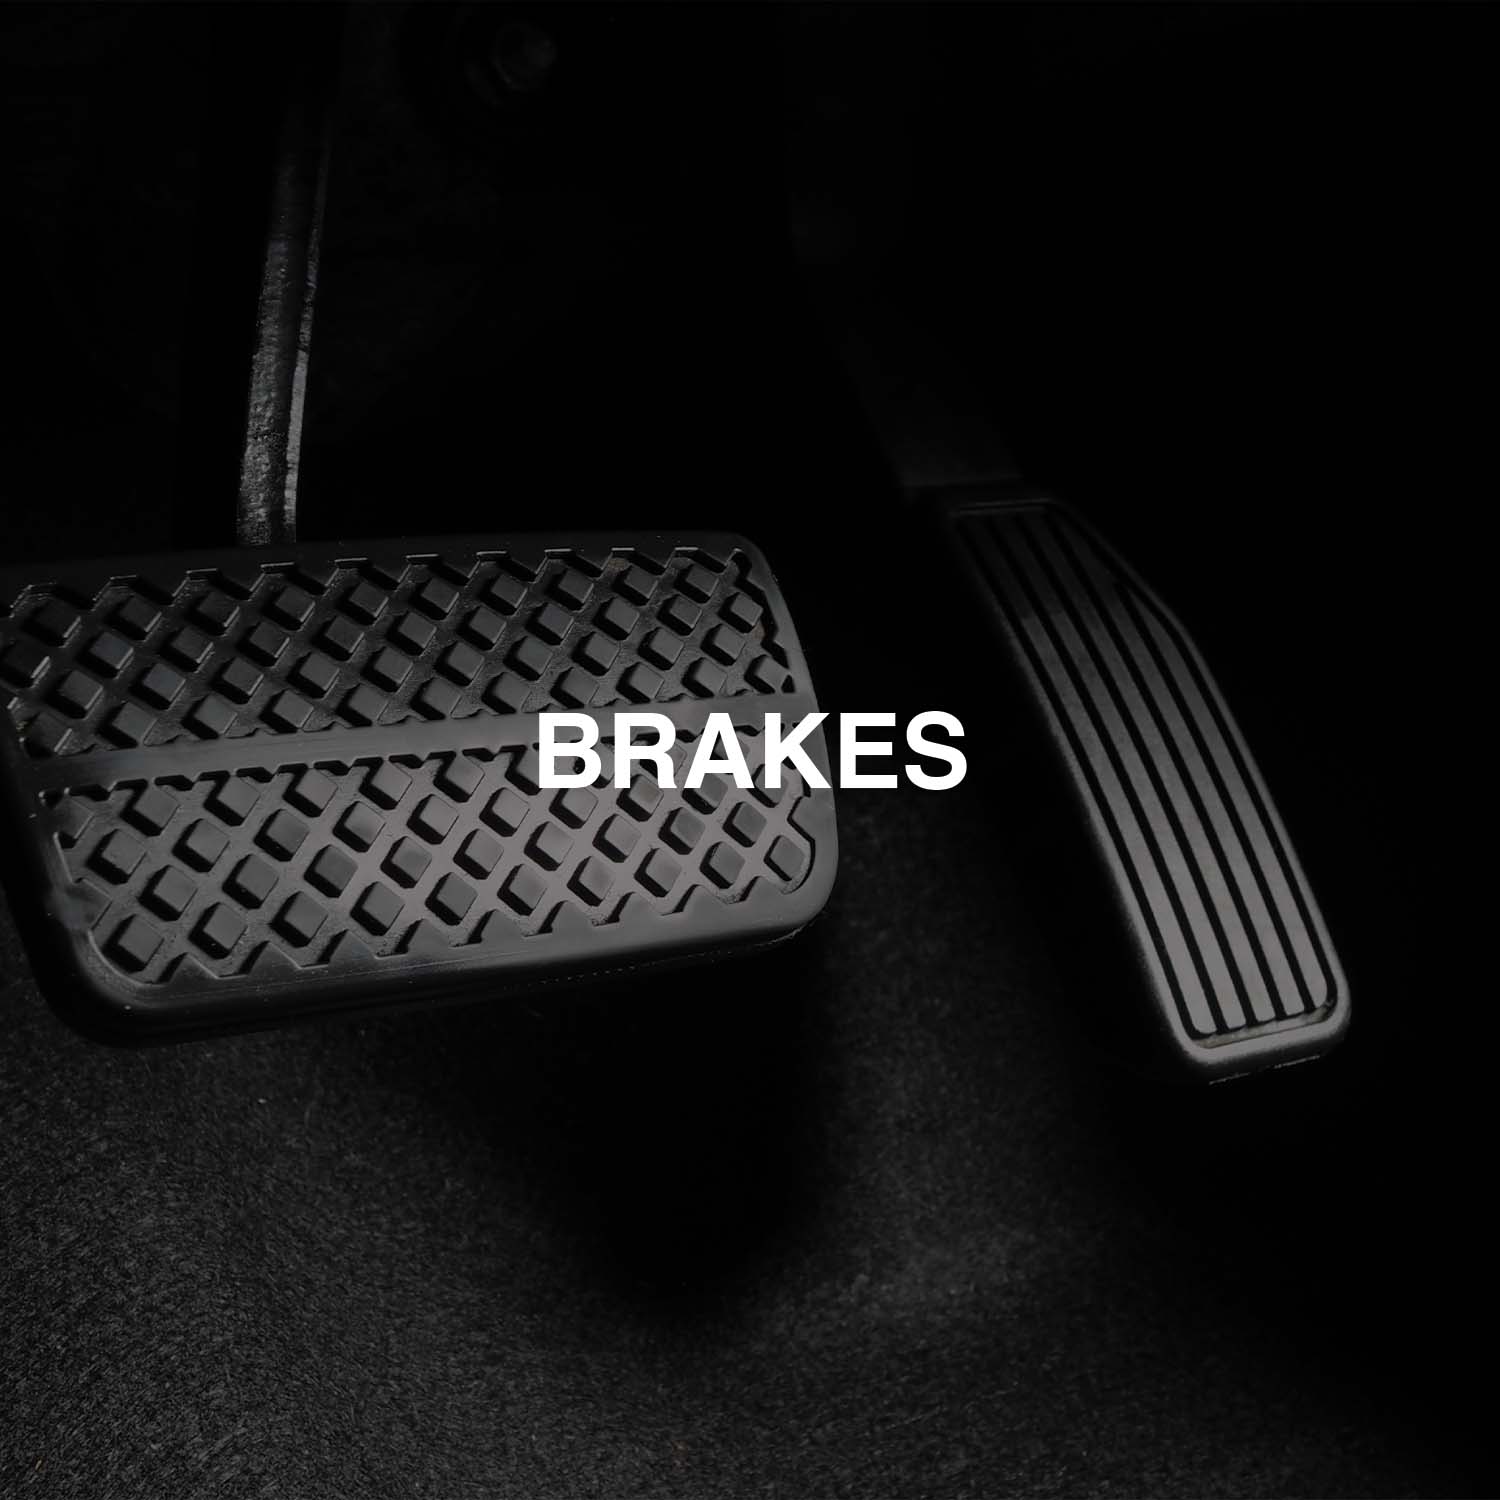 Brakes_title